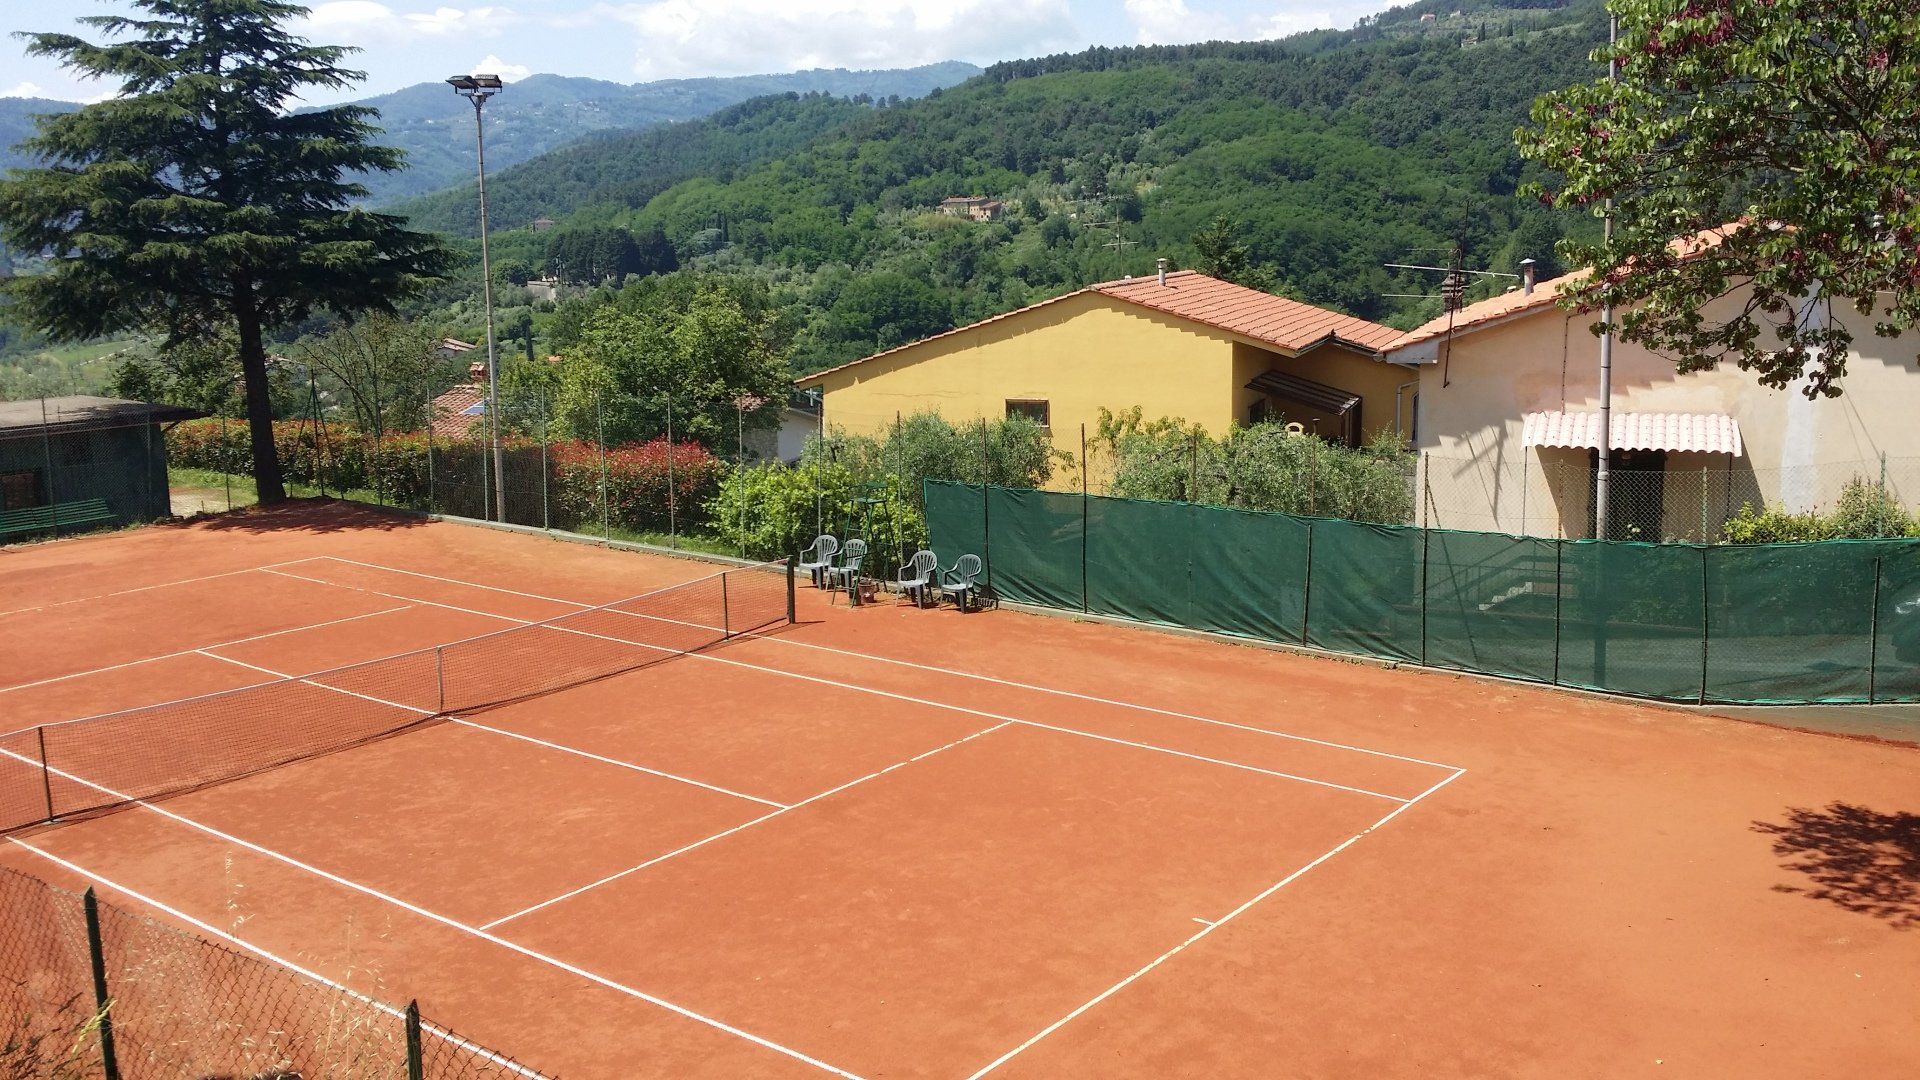 Tennis Serravalle, Agriturismo near the Tennis of Serravalle, Bed & Breakfast near the Tennis of Serravalle